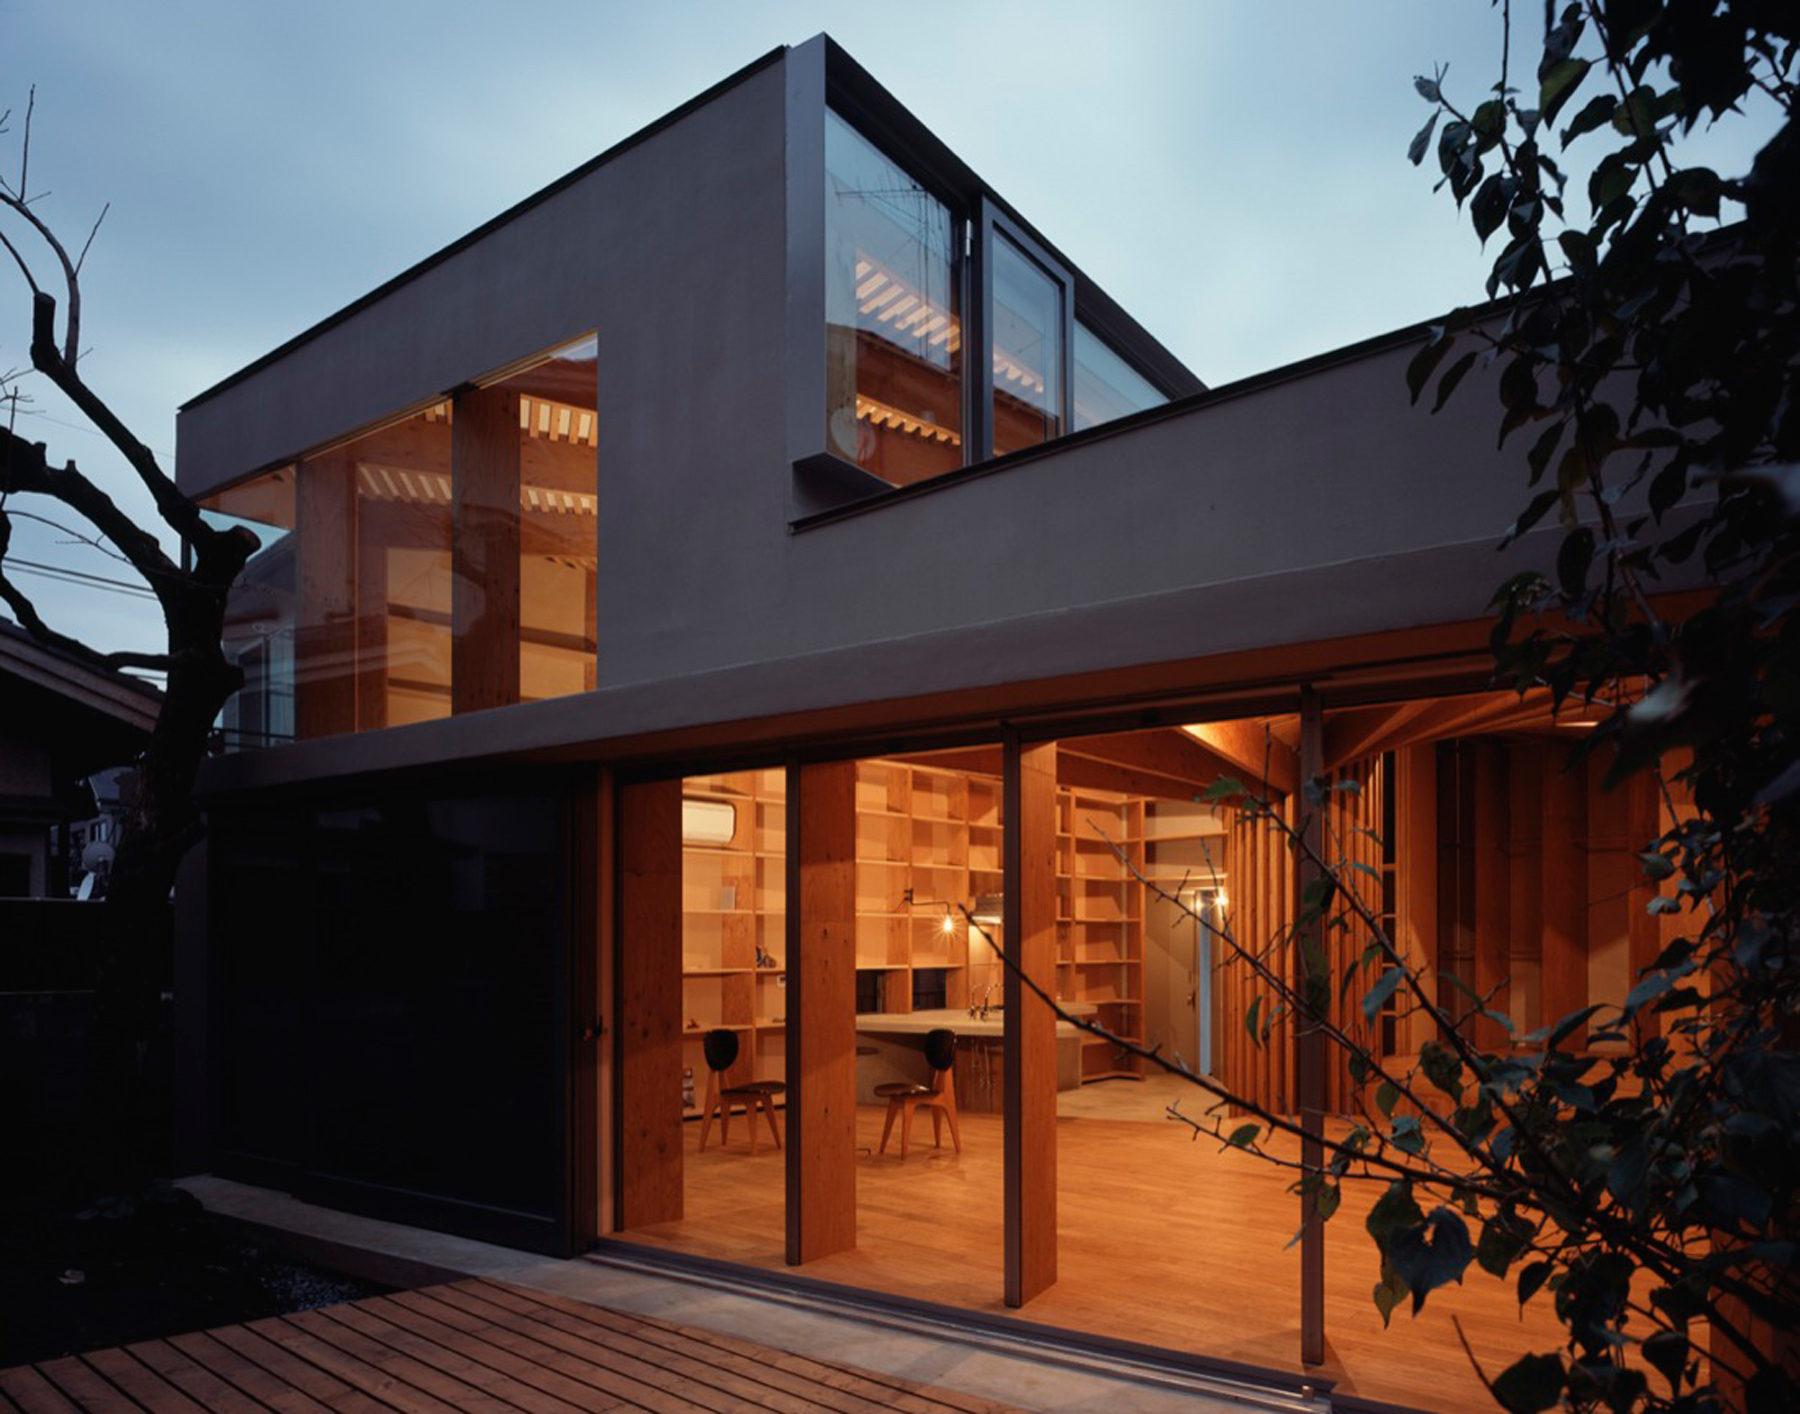 Tree House / Mount Fuji Architects Studio (9)